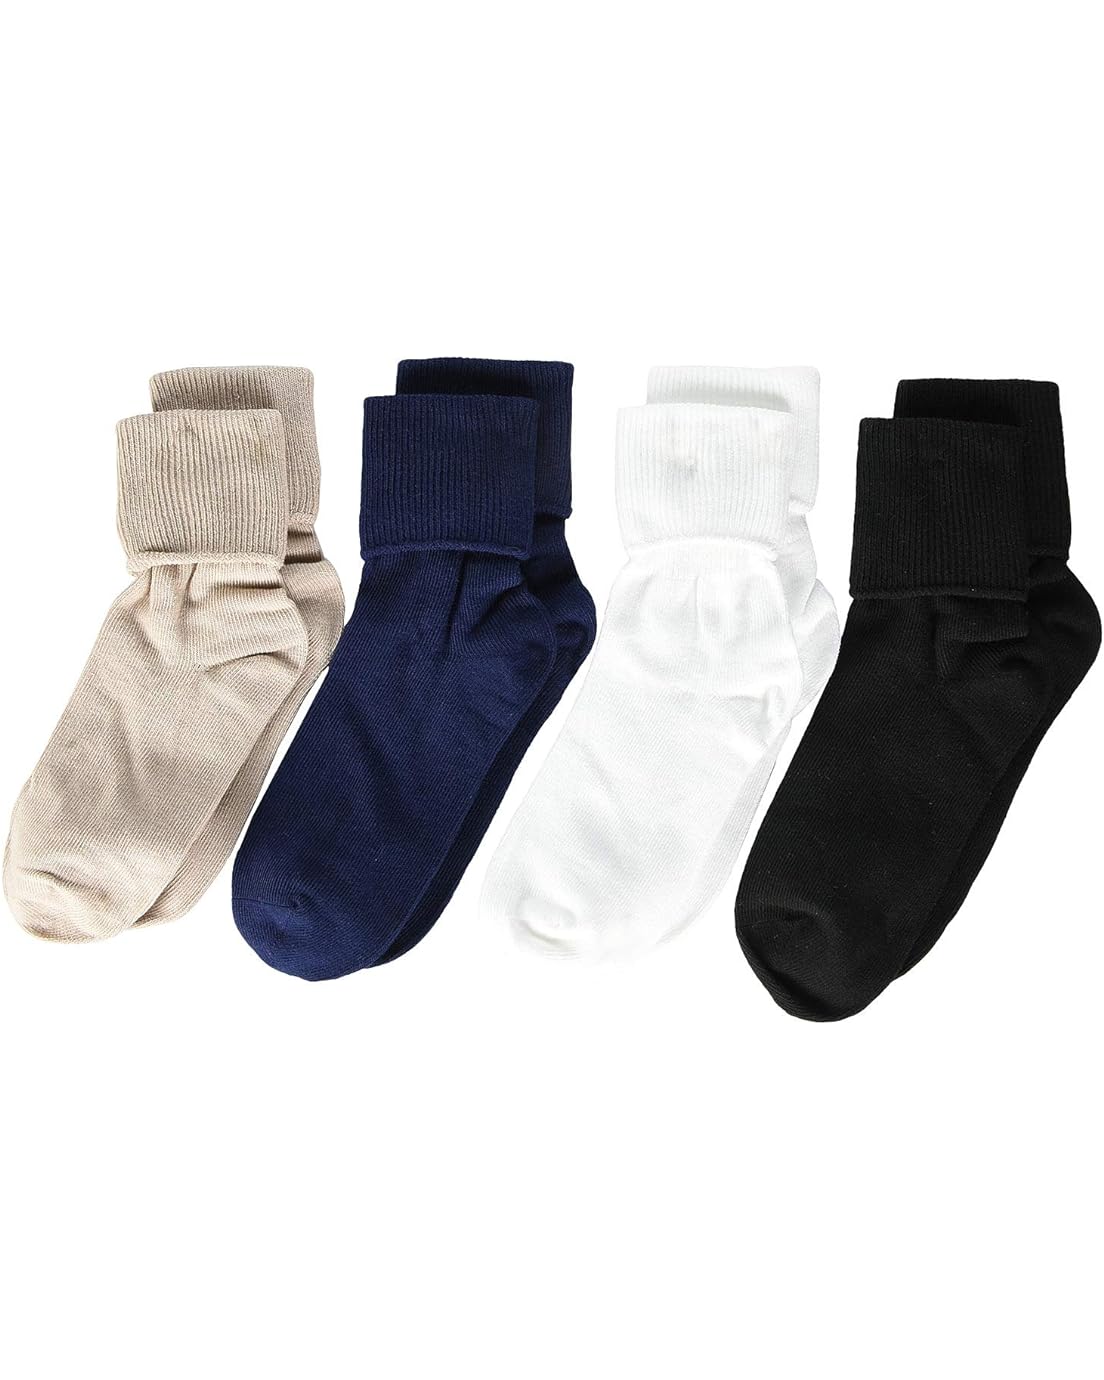 Jefferies Socks Seamless Turn Cuff Multi 4-Pack (Infant/Toddler/Little Kid/Big Kid/Adult)